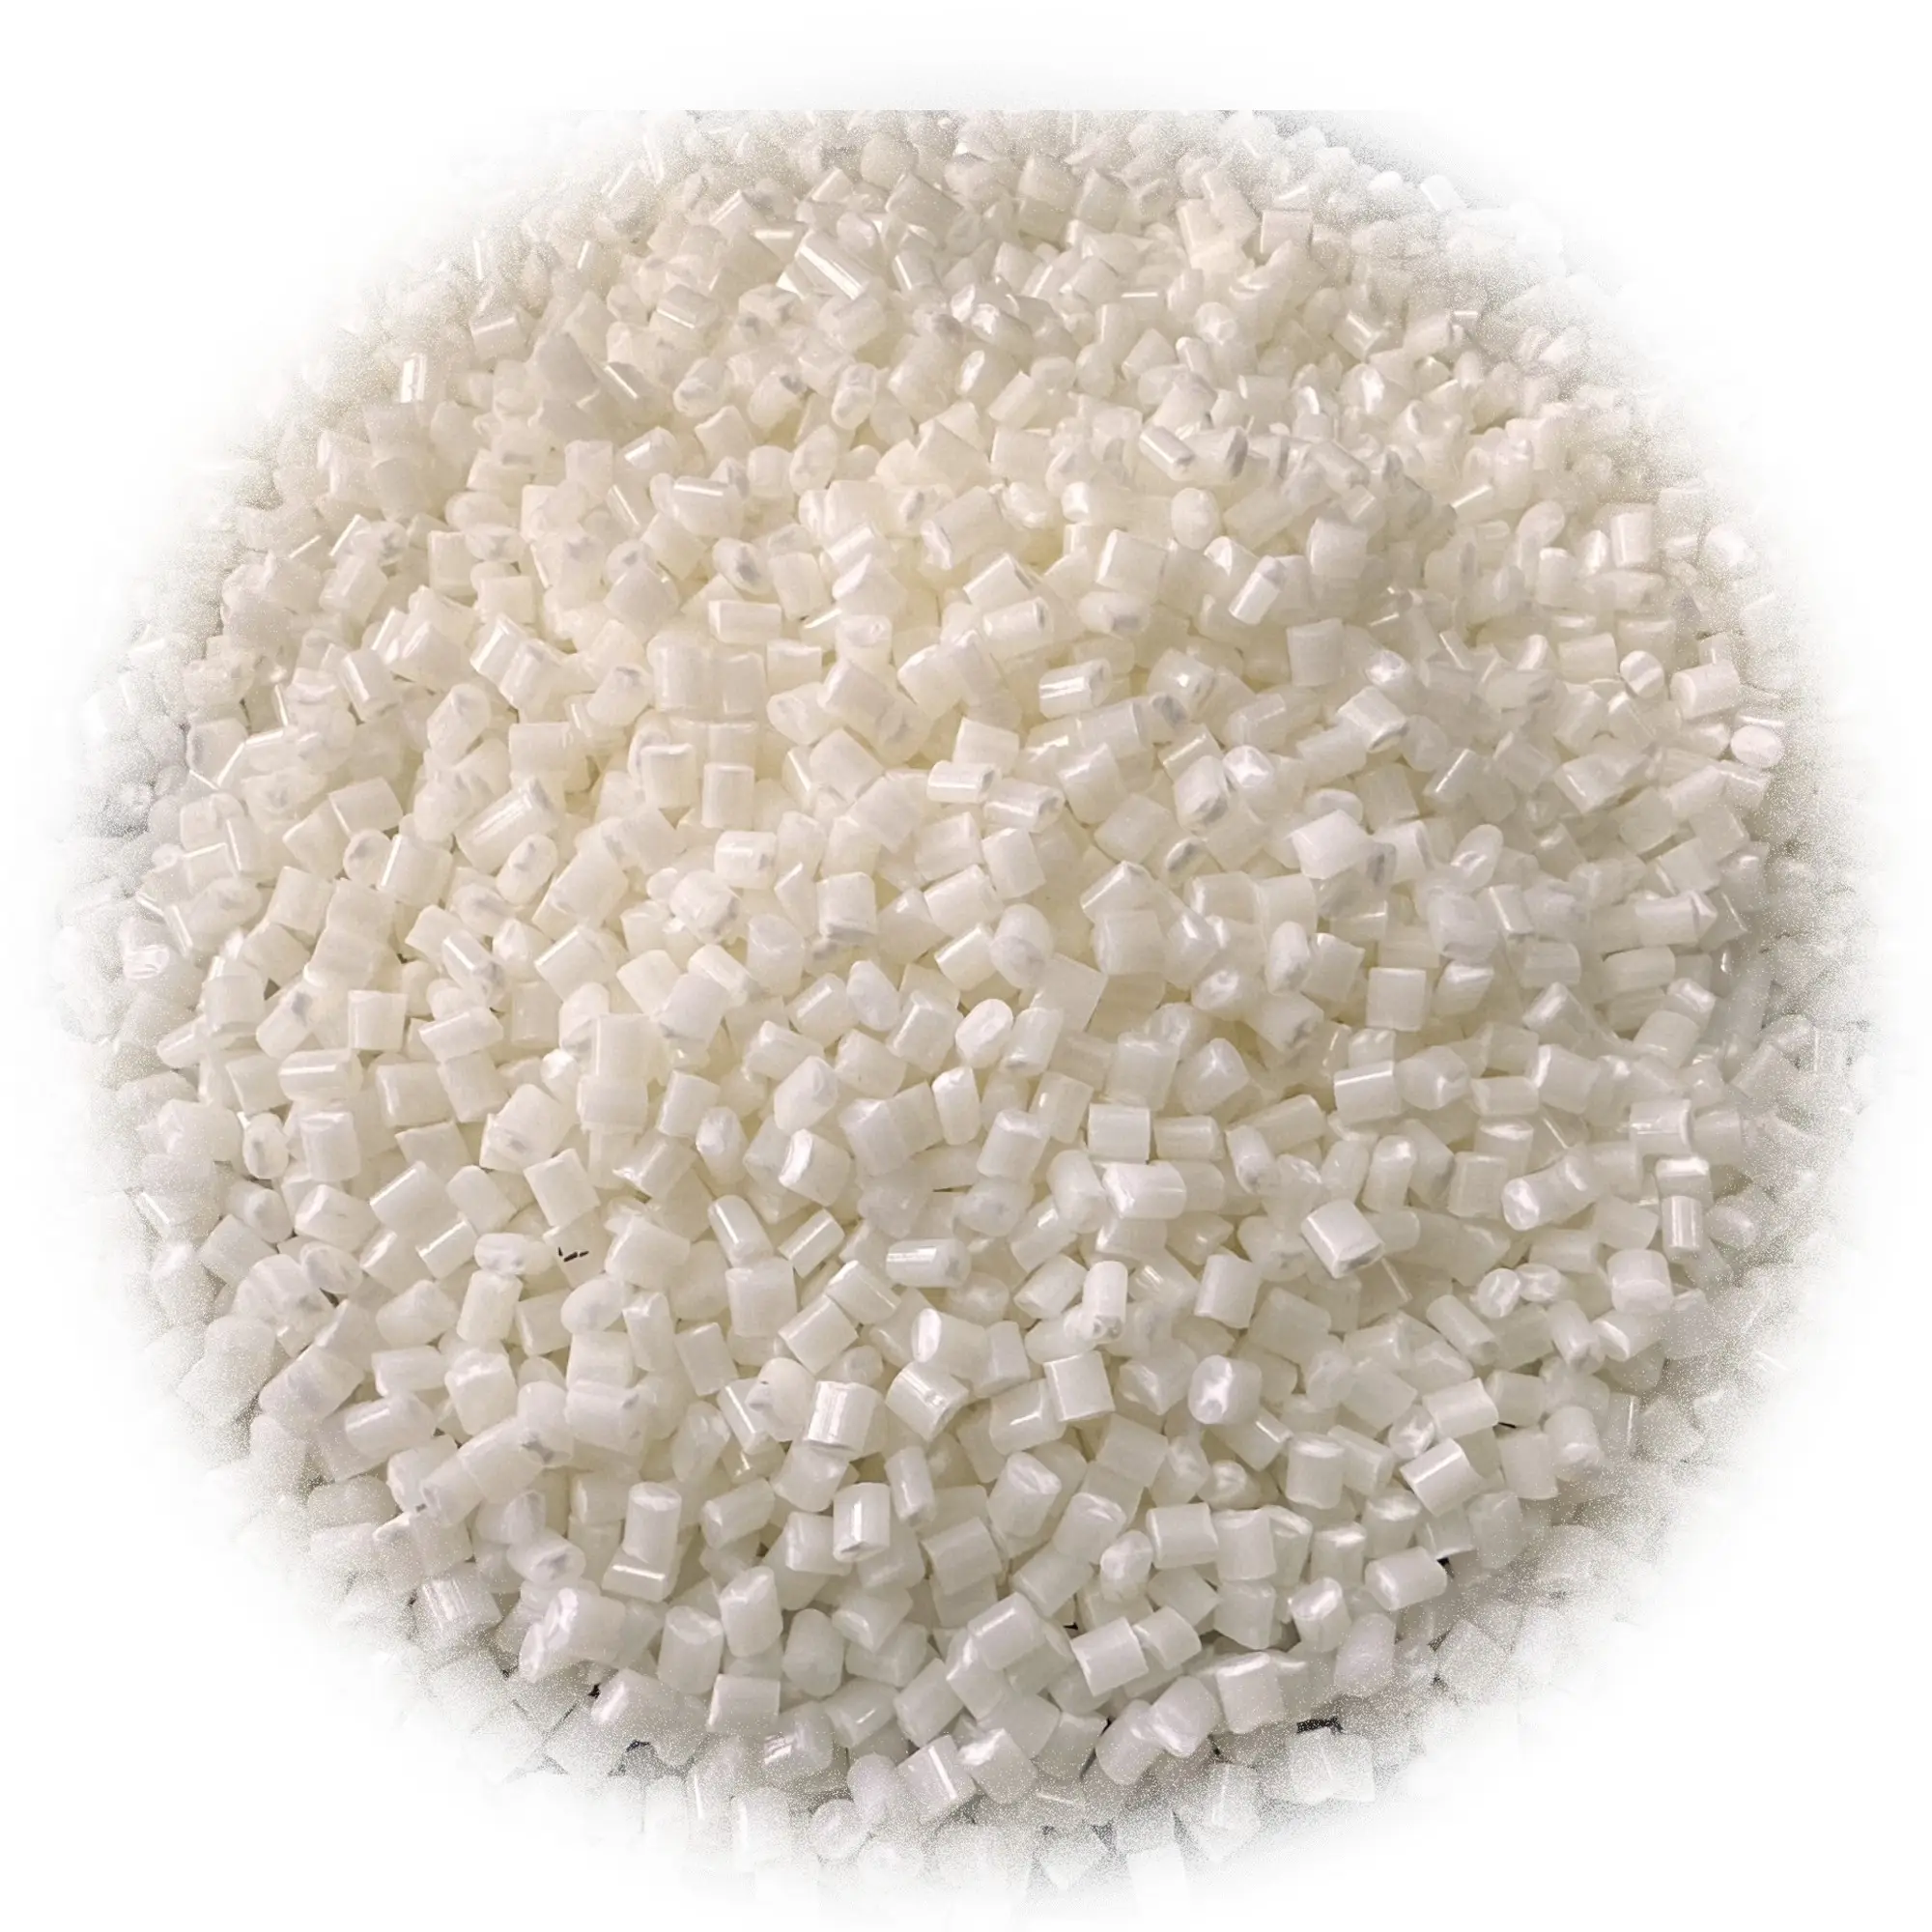 EVA EA28150 VA28% high softness vinyl acetate copolymer particles/Virgin EVA granules/pellets for hot melt adhesive